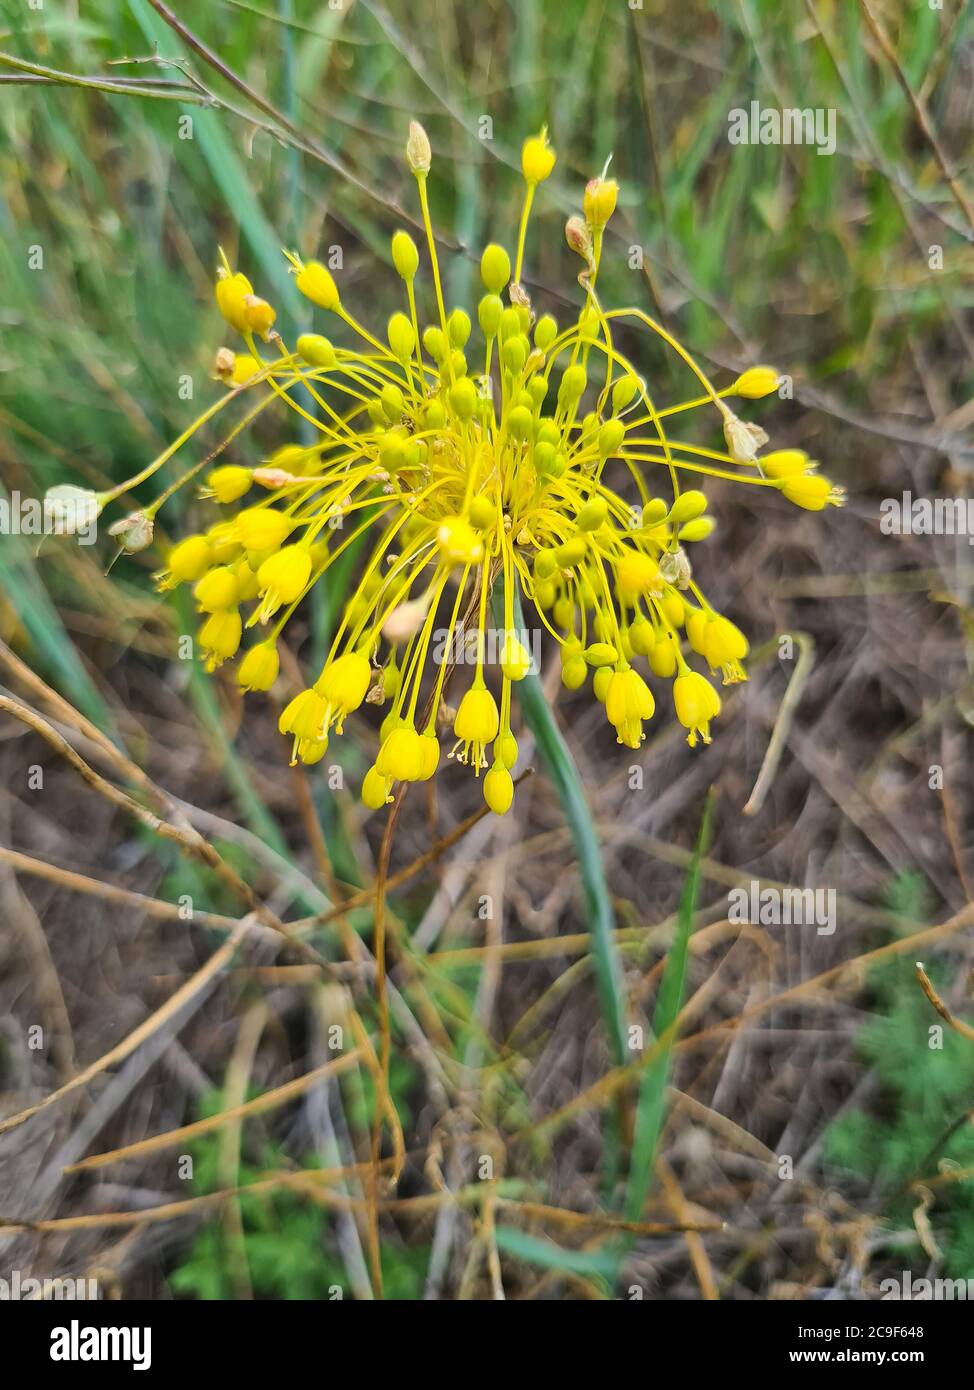 Austria, yellow flowering garlic Stock Photo